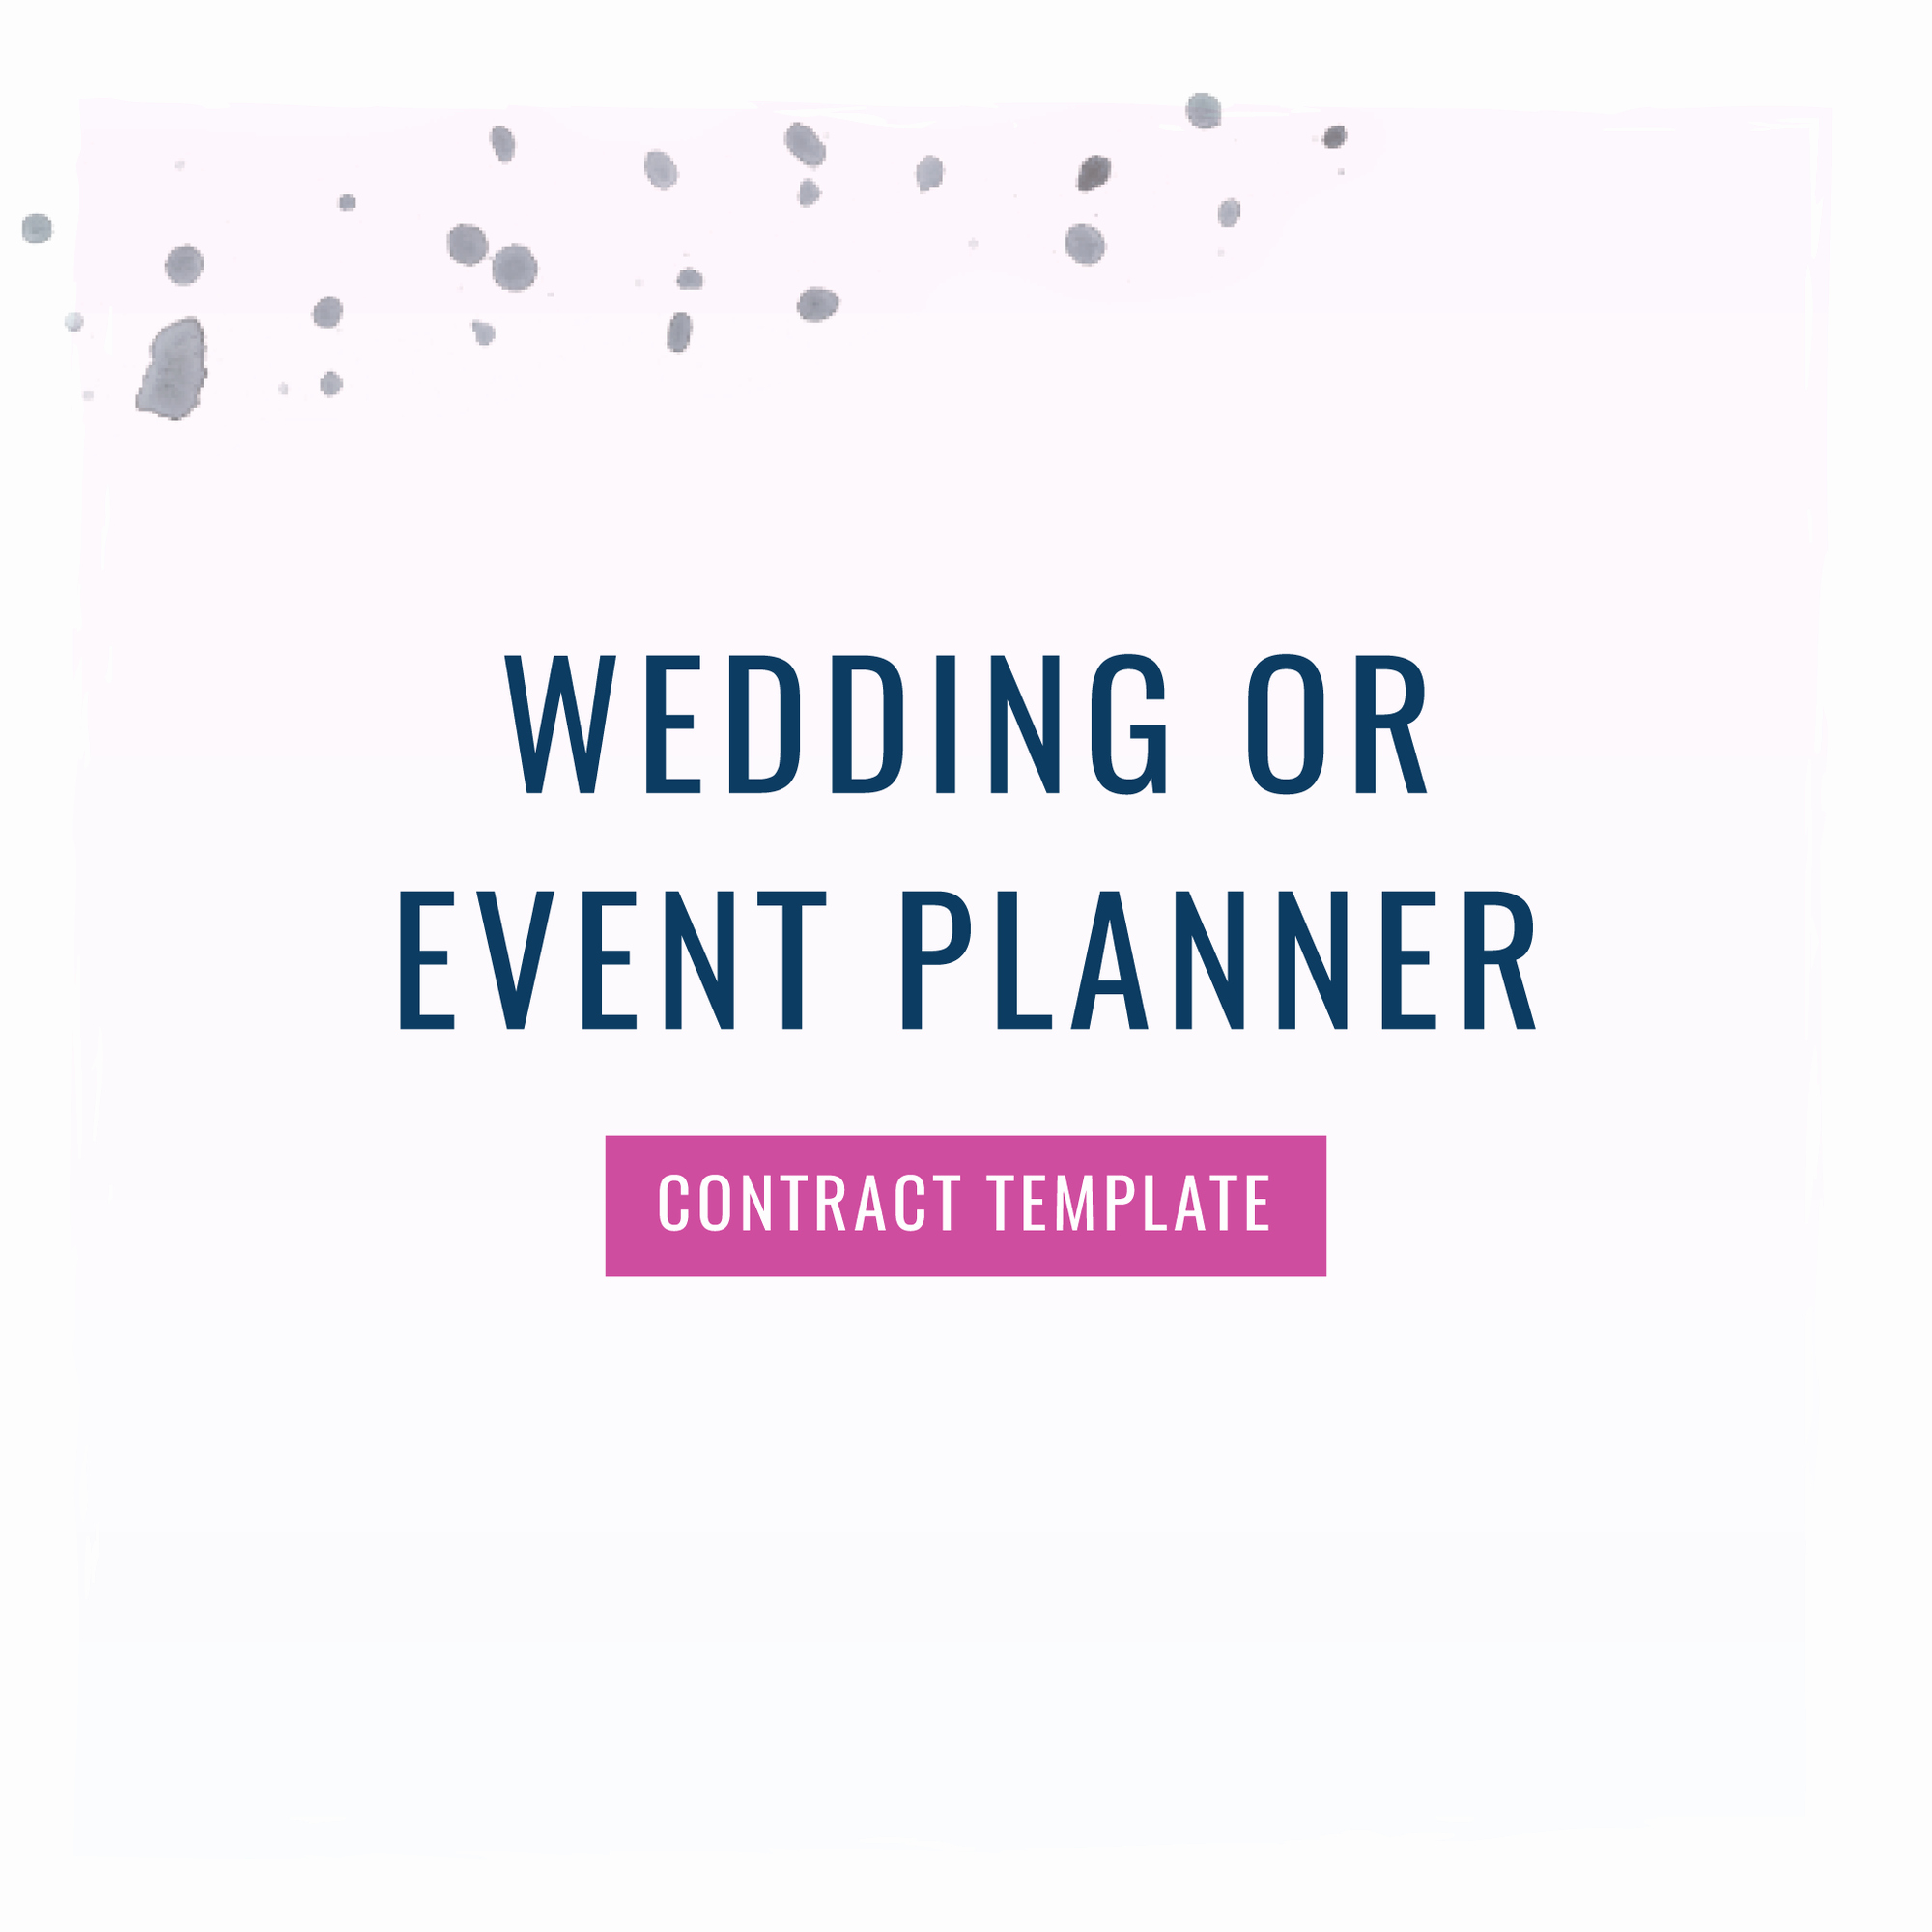 Wedding Planning Contract Templates Luxury Wedding or event Planner Contract Template the Contract